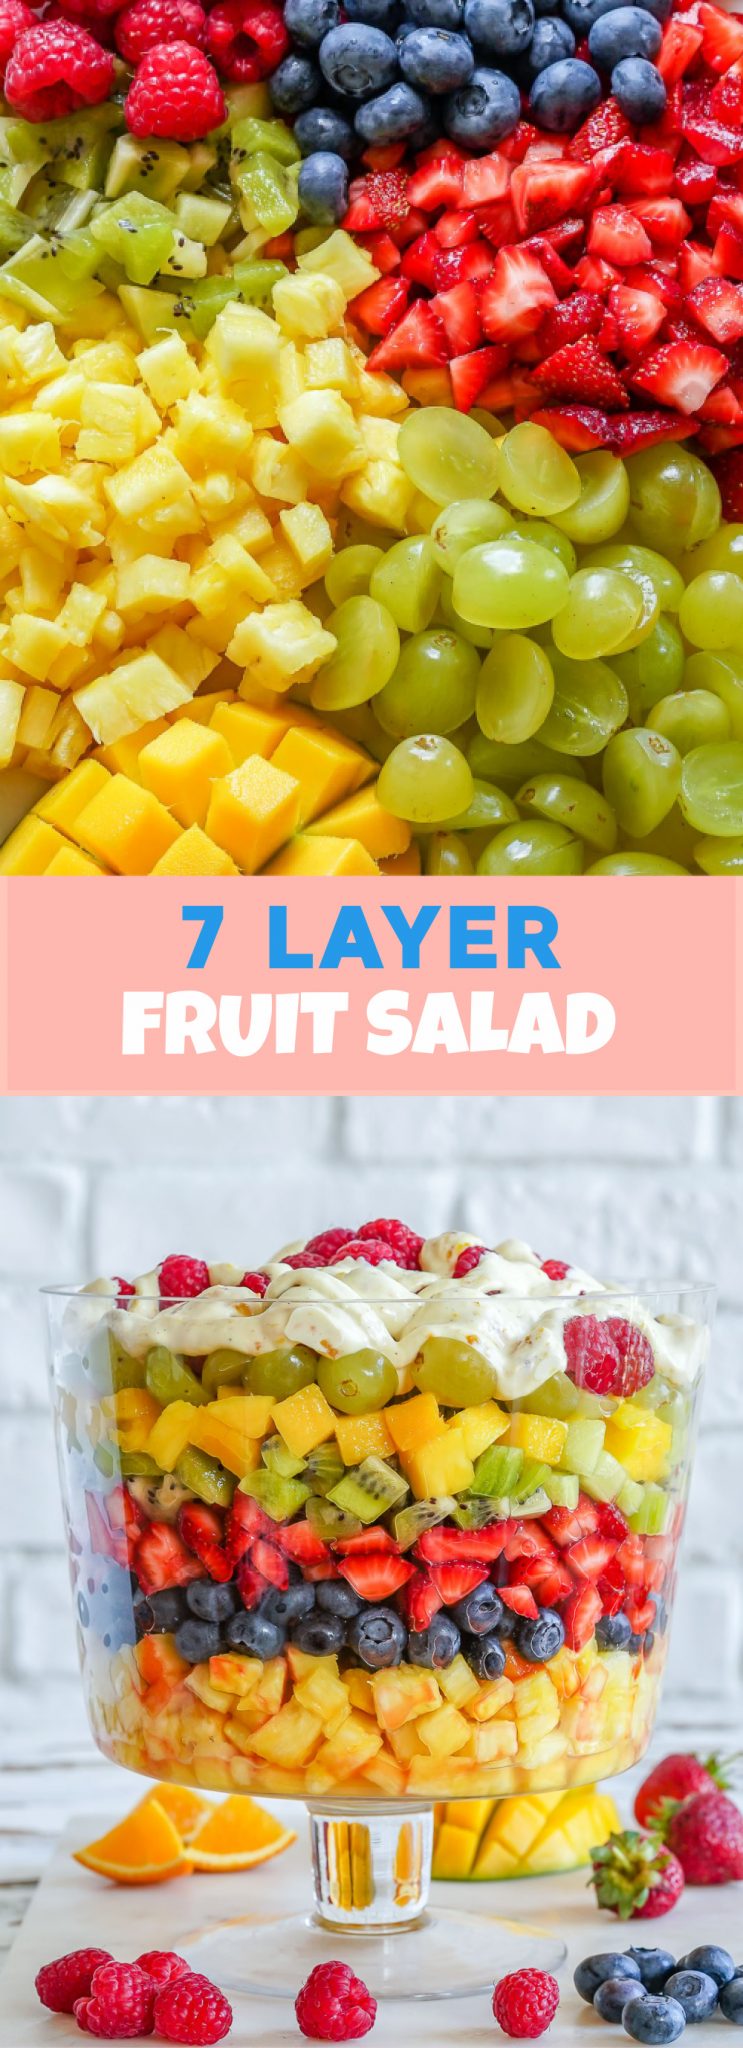 https://cleanfoodcrush.com/wp-content/uploads/2020/08/7-Layer-Fresh-Fruit-Salad-CleanFoodCrush-Healthy-Printable-Recipe-scaled.jpg